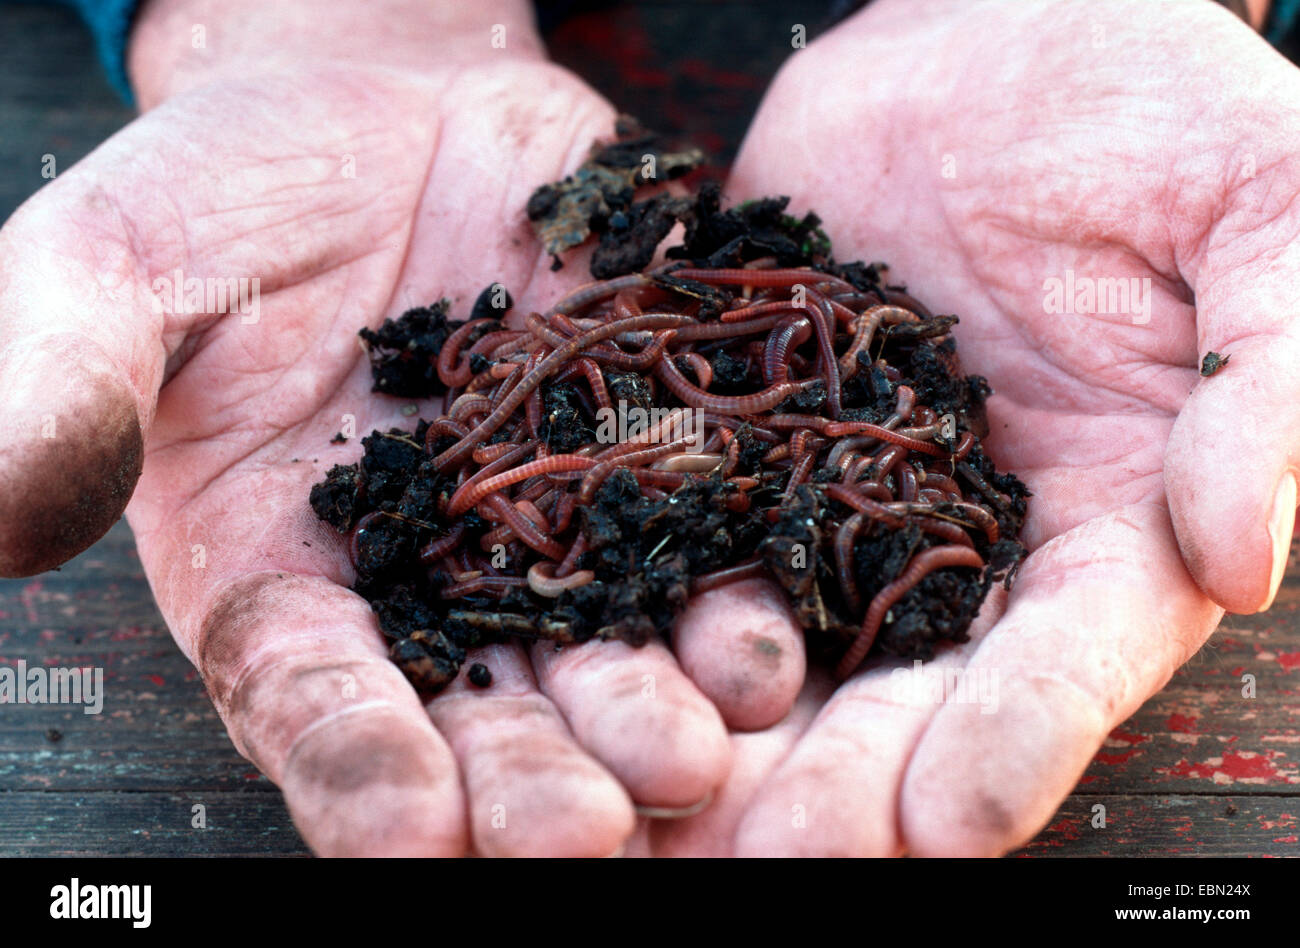 brandling, manure worm (Eisenia fetida, Eisenia foetida), with soil in hands, Germany Stock Photo